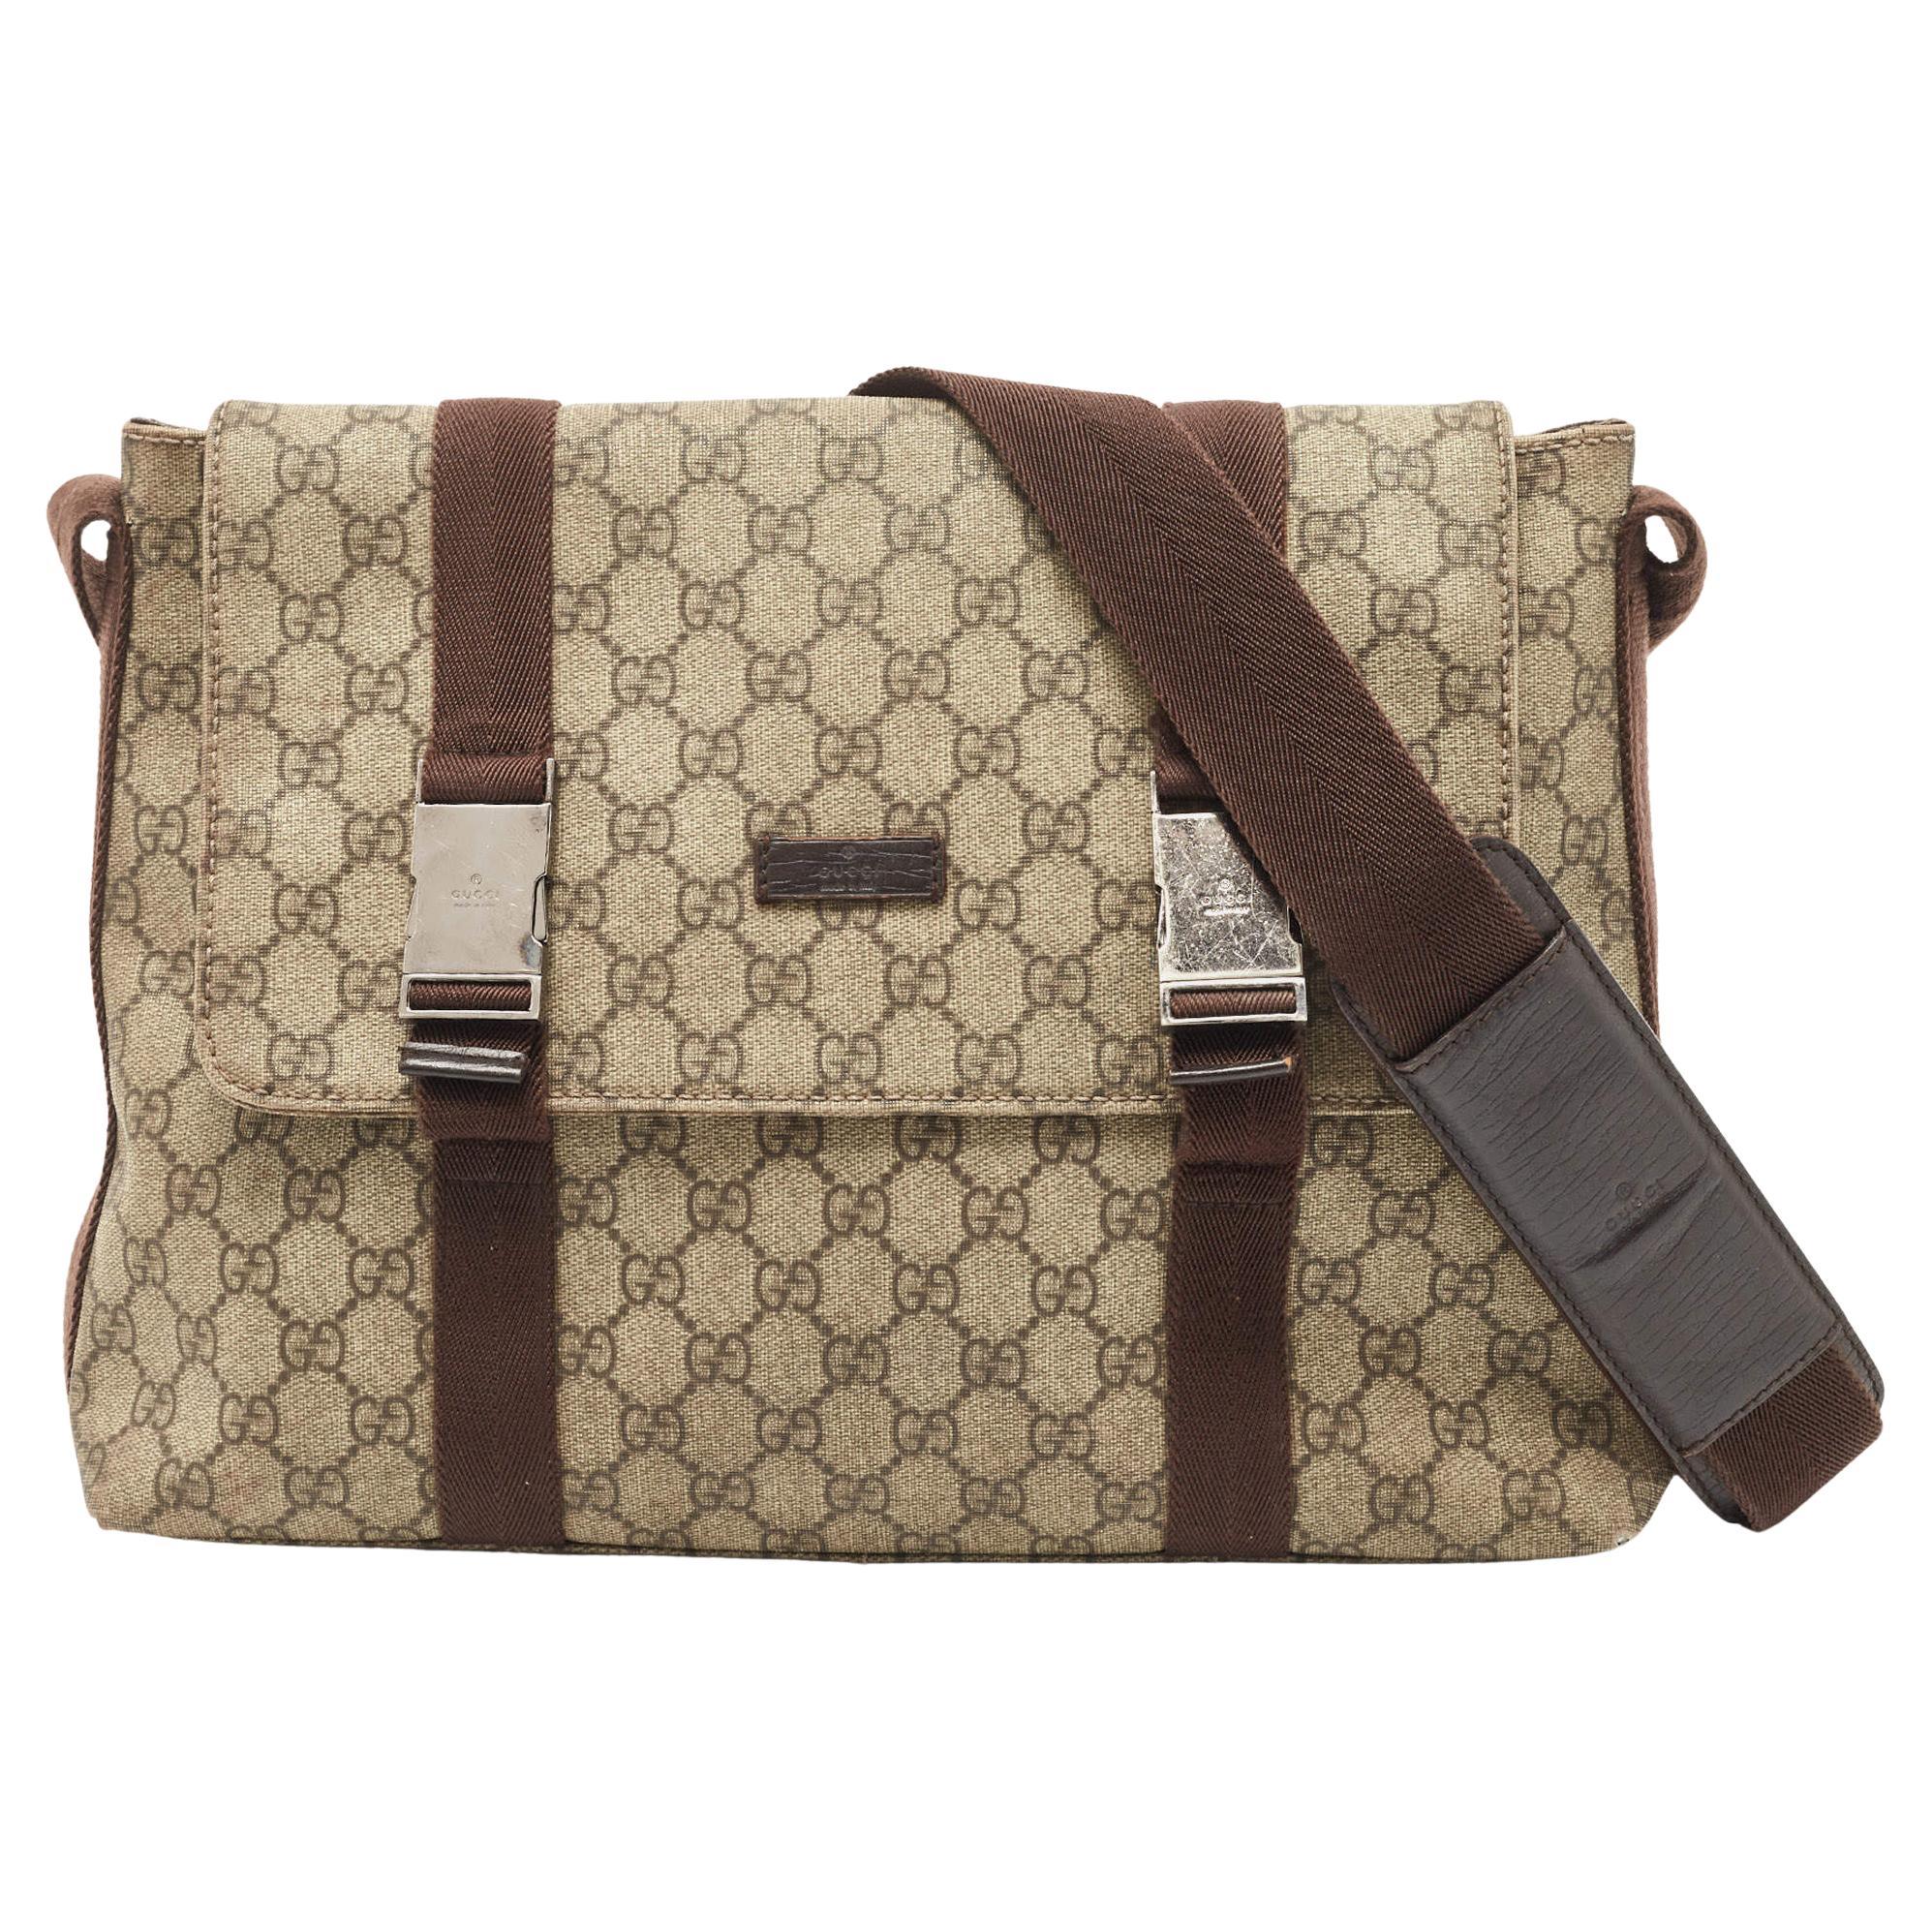 Gucci Beige/Brown GG Supreme Canvas Double Buckle Flap Messenger Bag